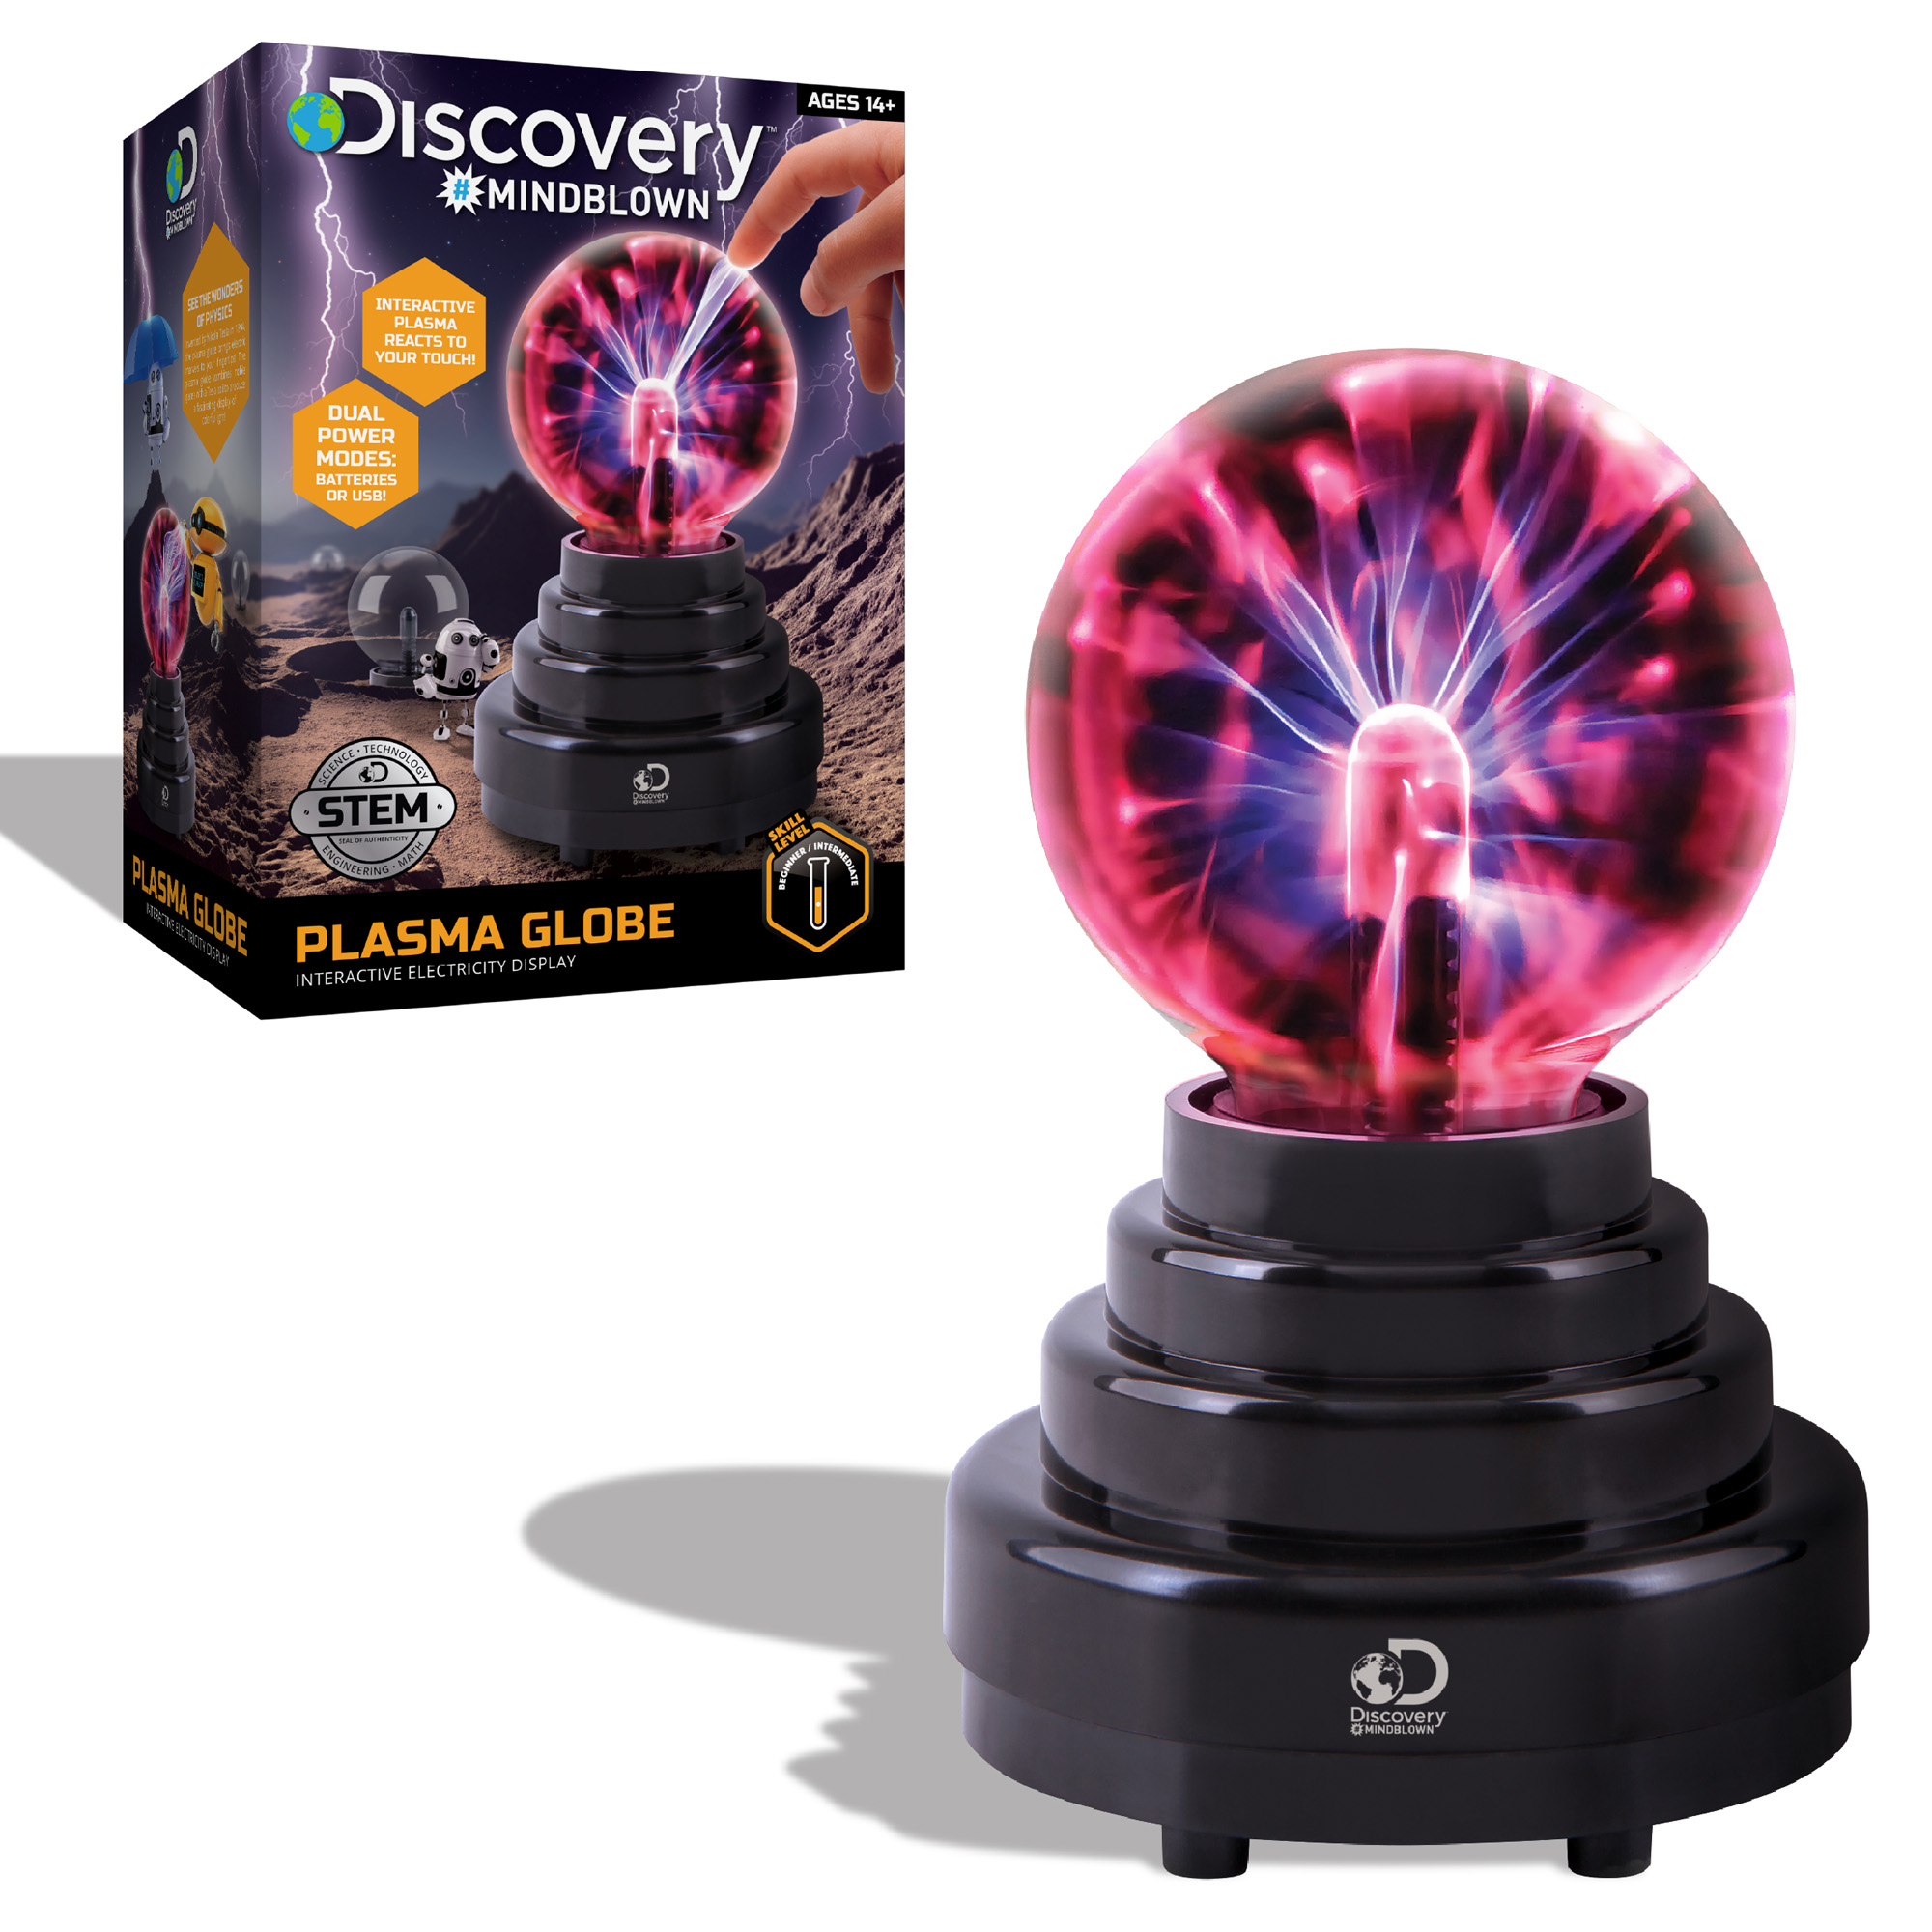 Sfera al plasma con raggi luminosi - Discovery Mindblown